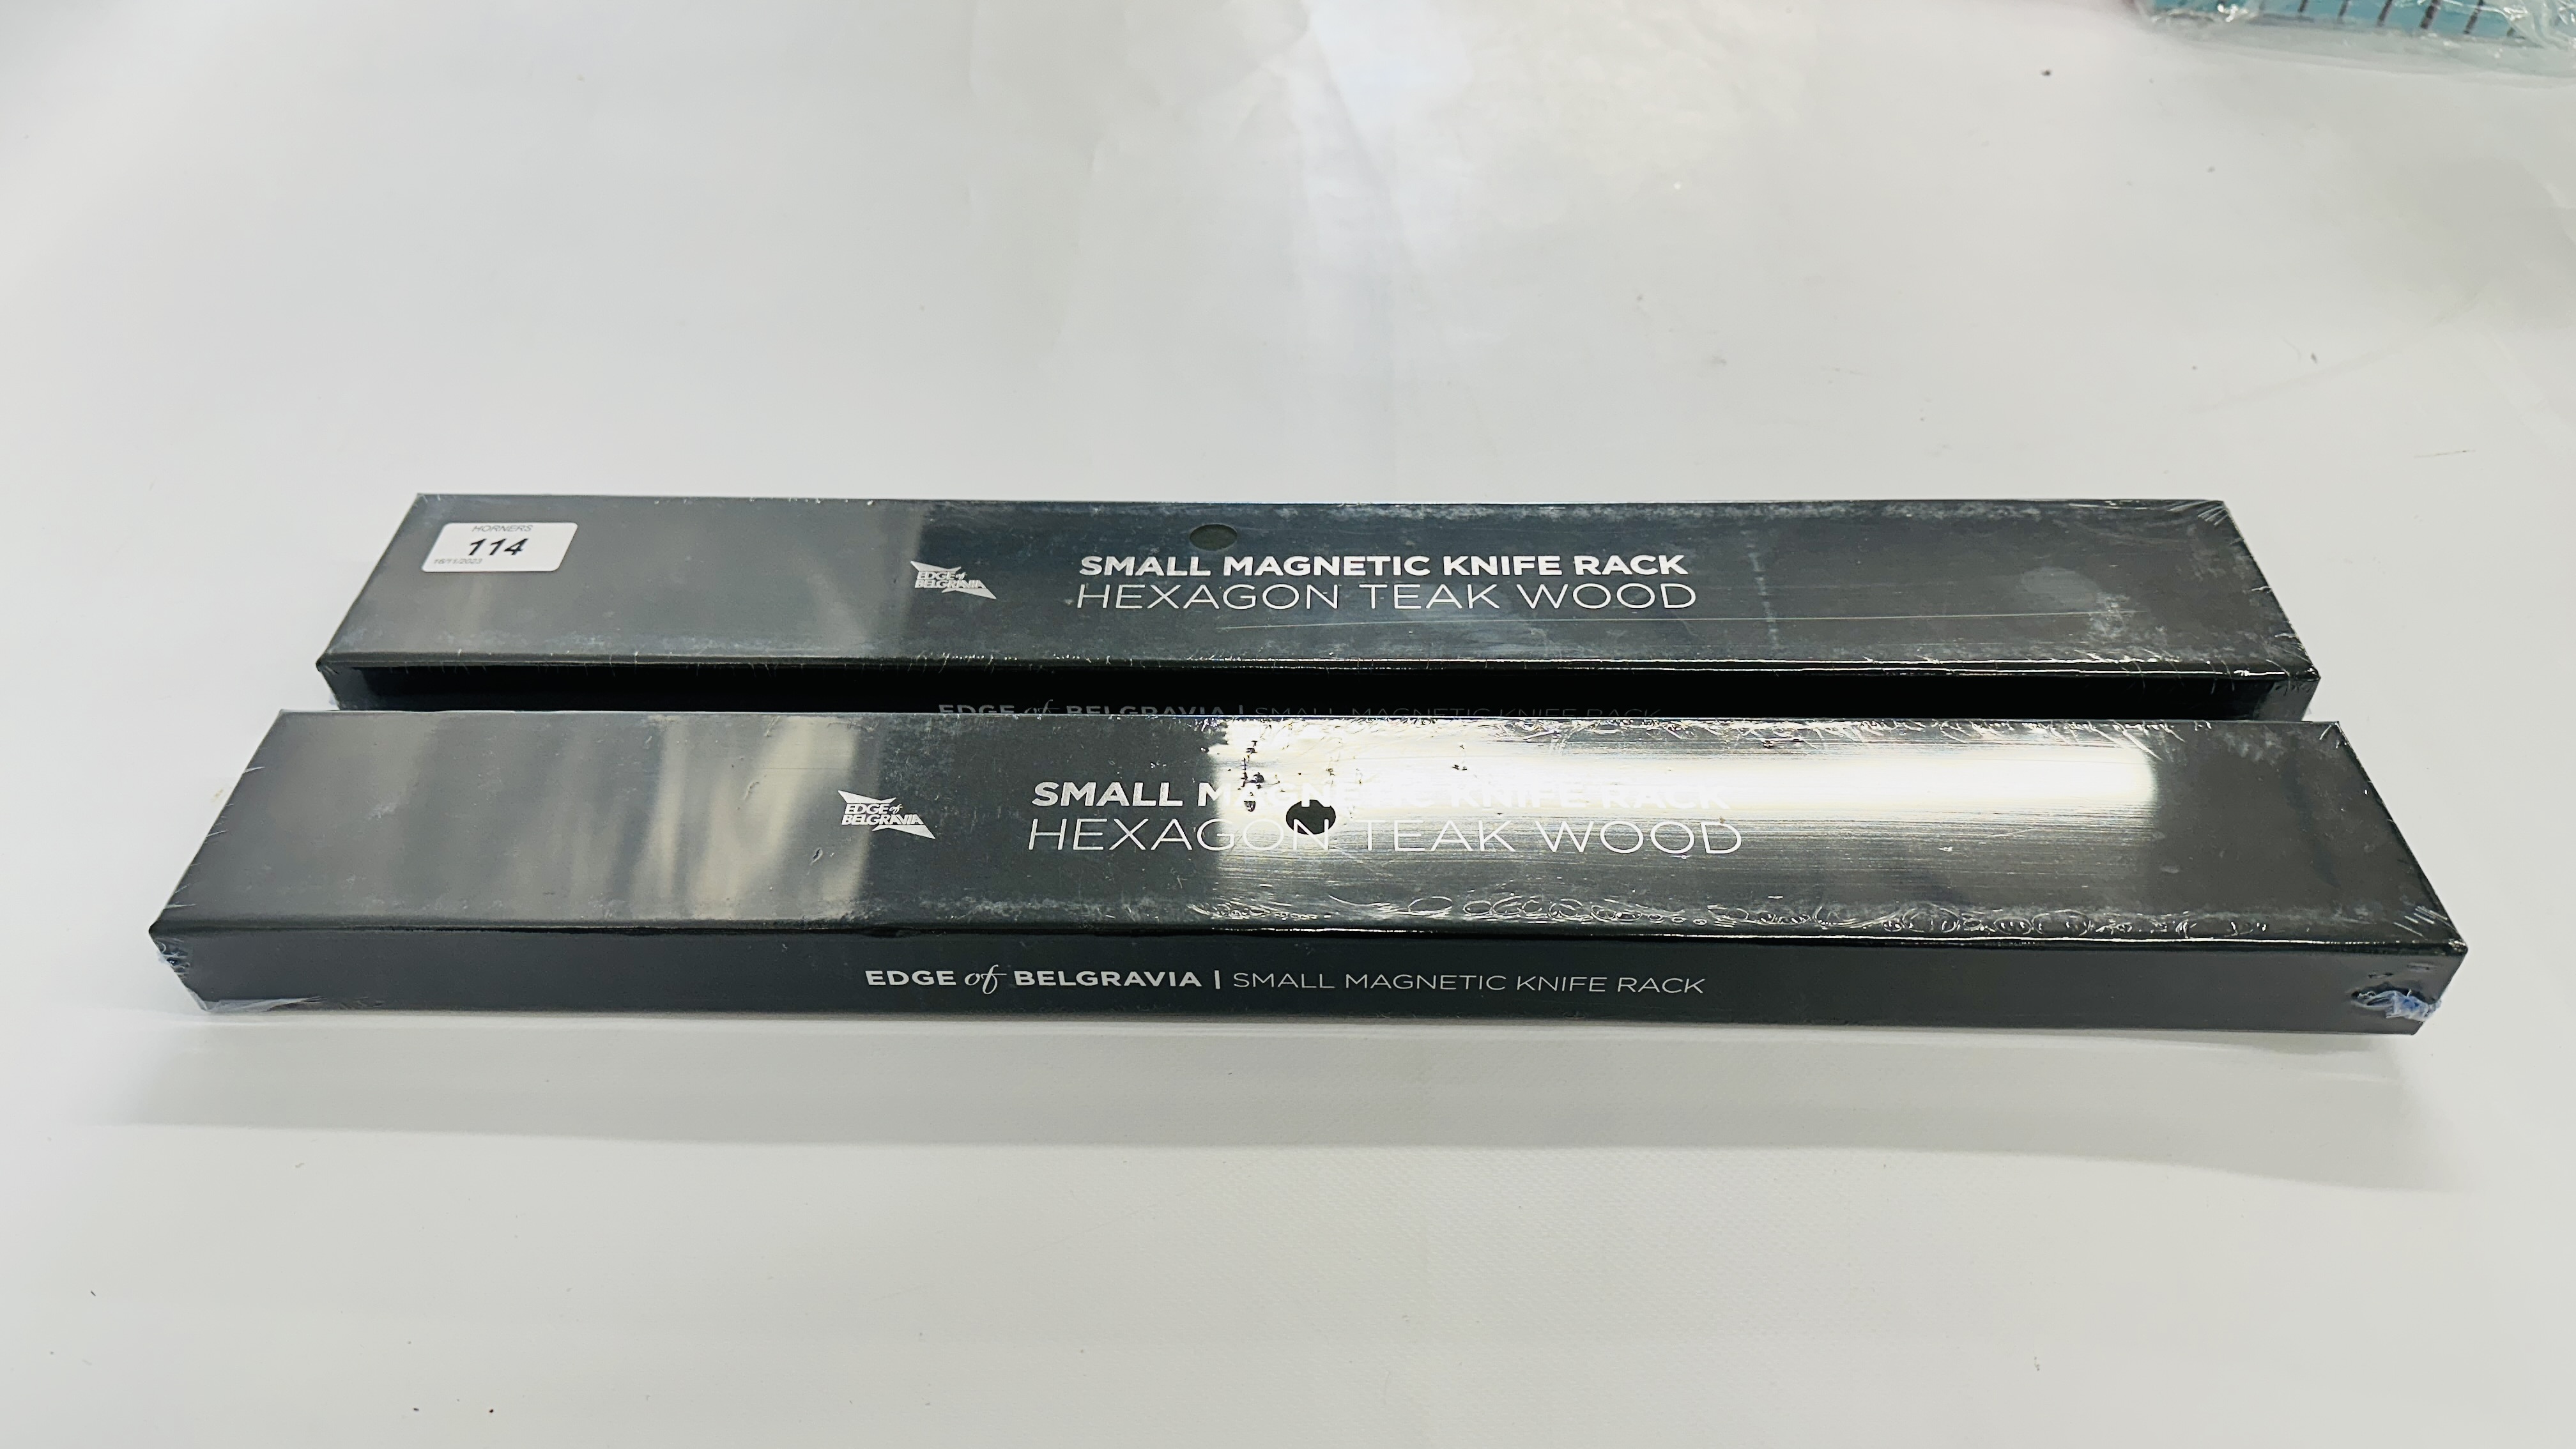 2 X AS NEW BOXED EDGE OF BELGRAVIA SMALL MAGNETIC KNIFE RACK HEXAGON TEAK WOOD. - Image 2 of 3